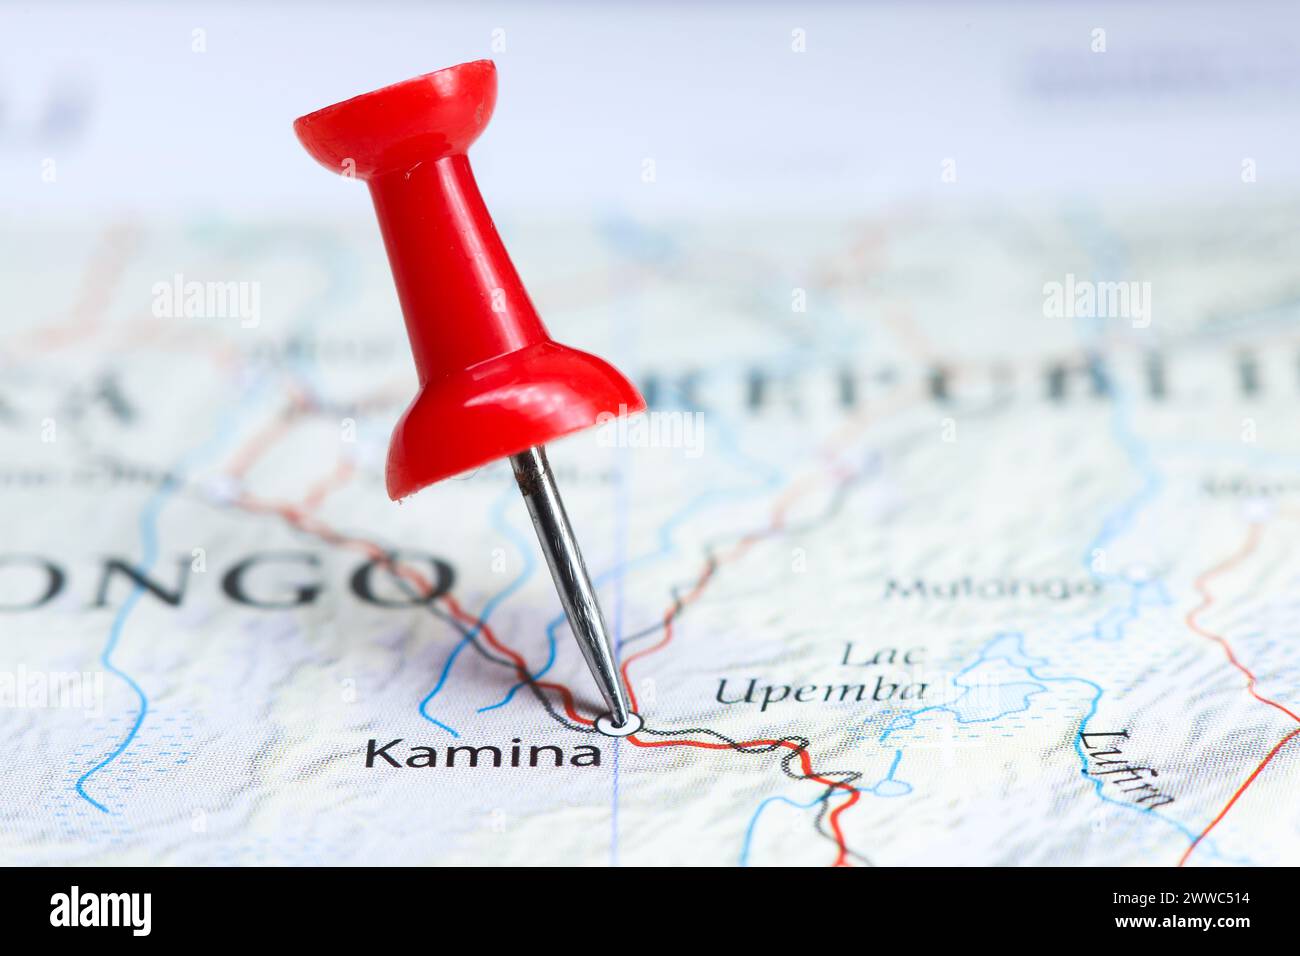 Kamina, Congo pin on map Stock Photo